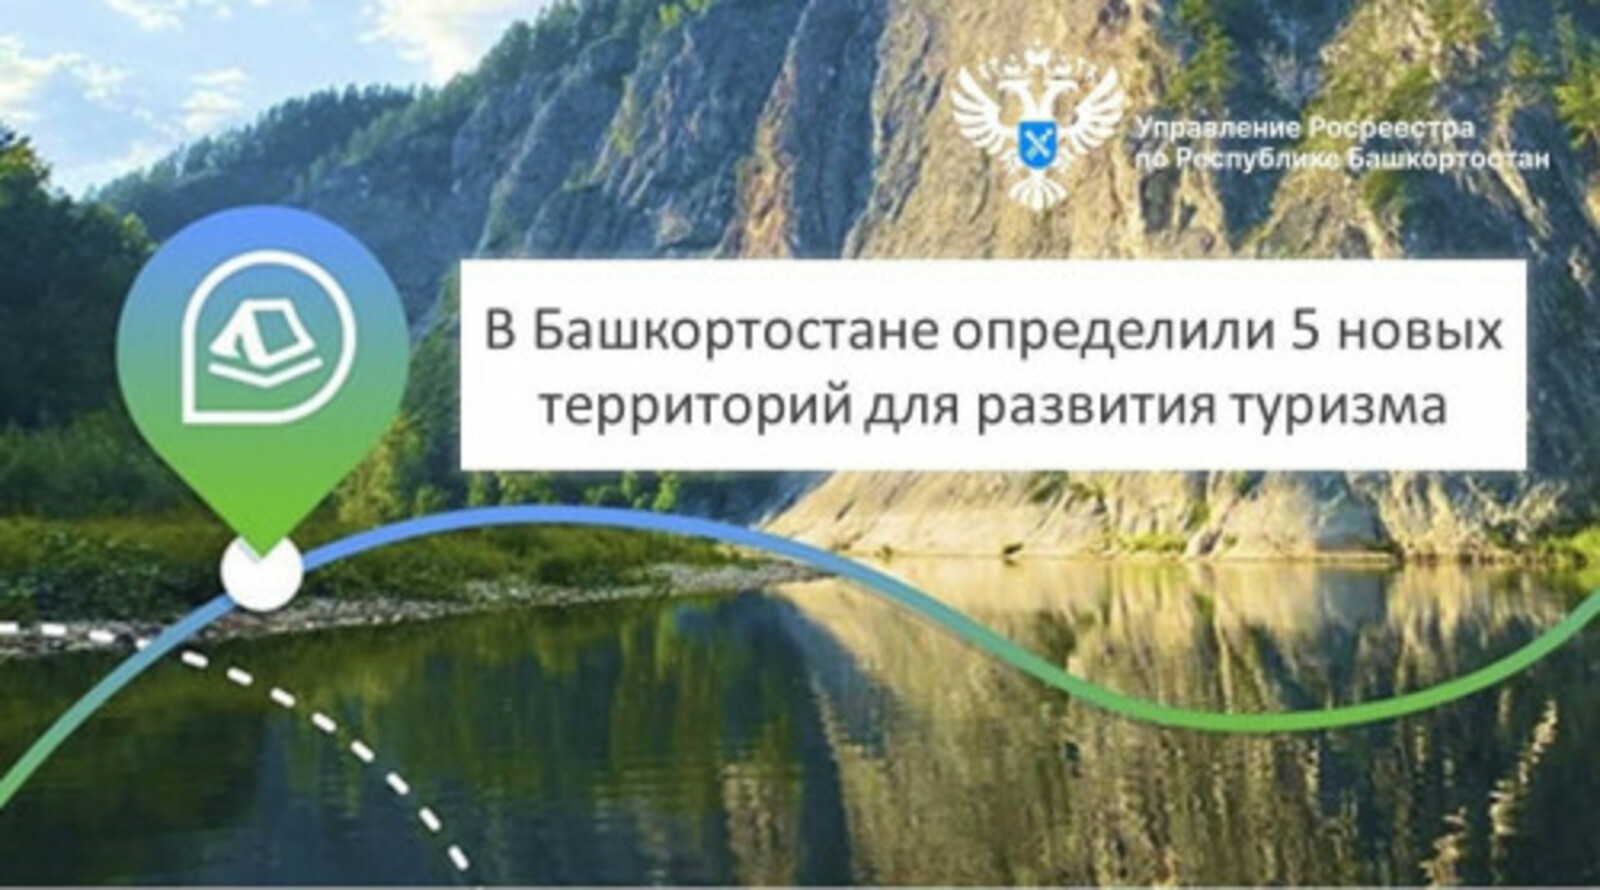 В Башкортостане определили 5 территорий для развития туризма